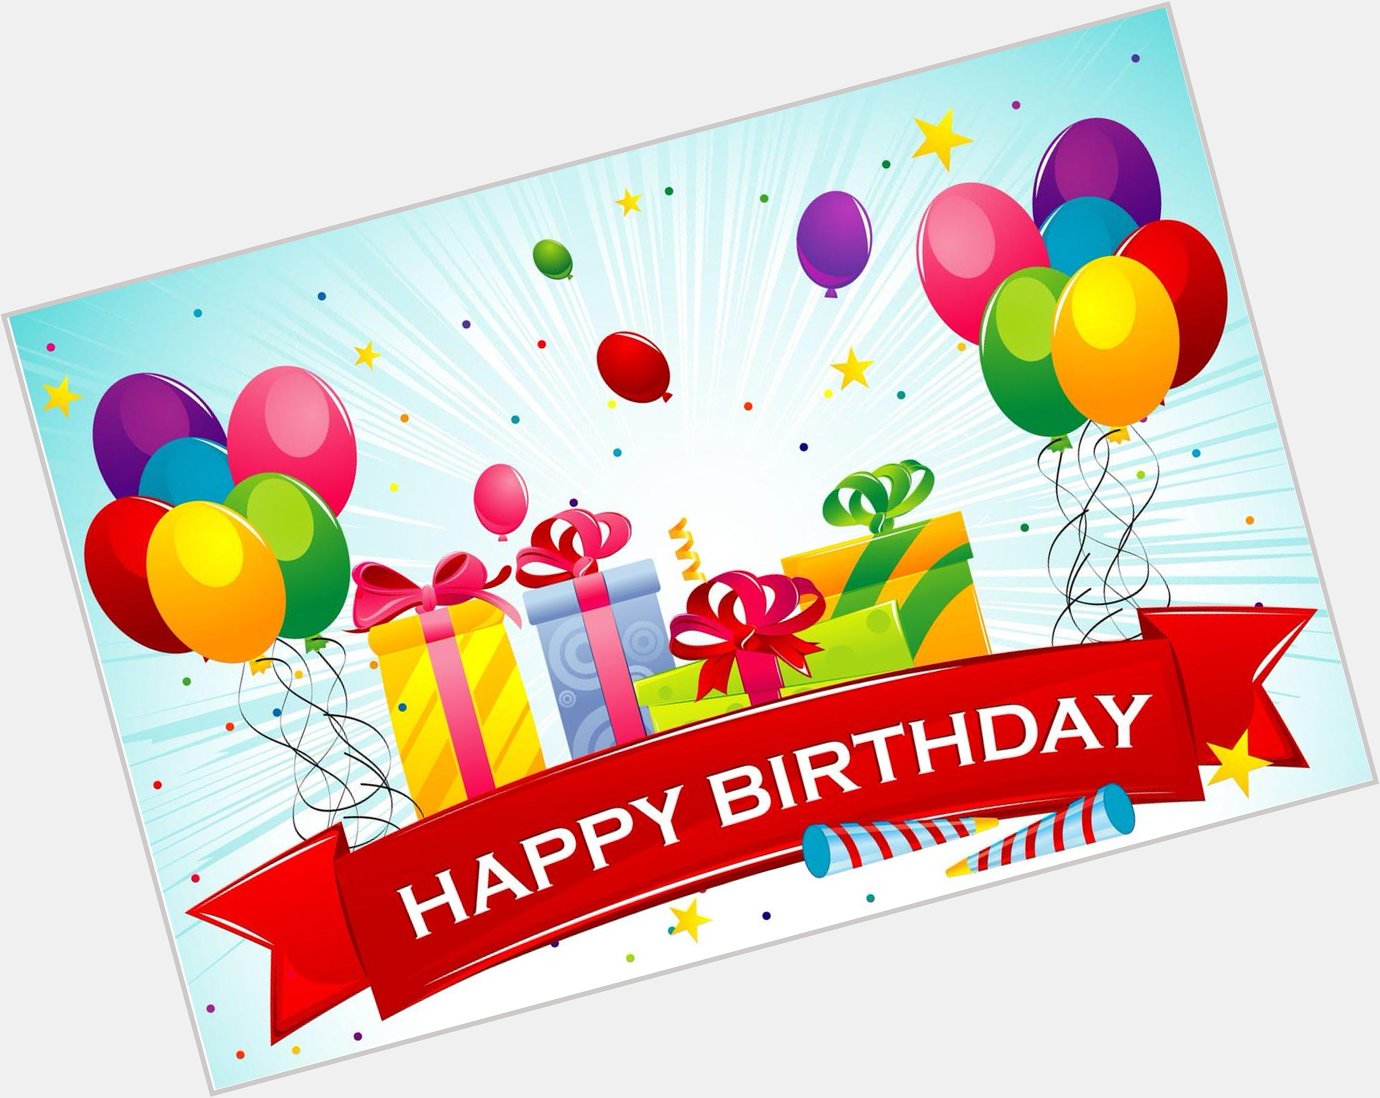    Happy Birthday, Triple H! Hope your birthday is fantastic! 